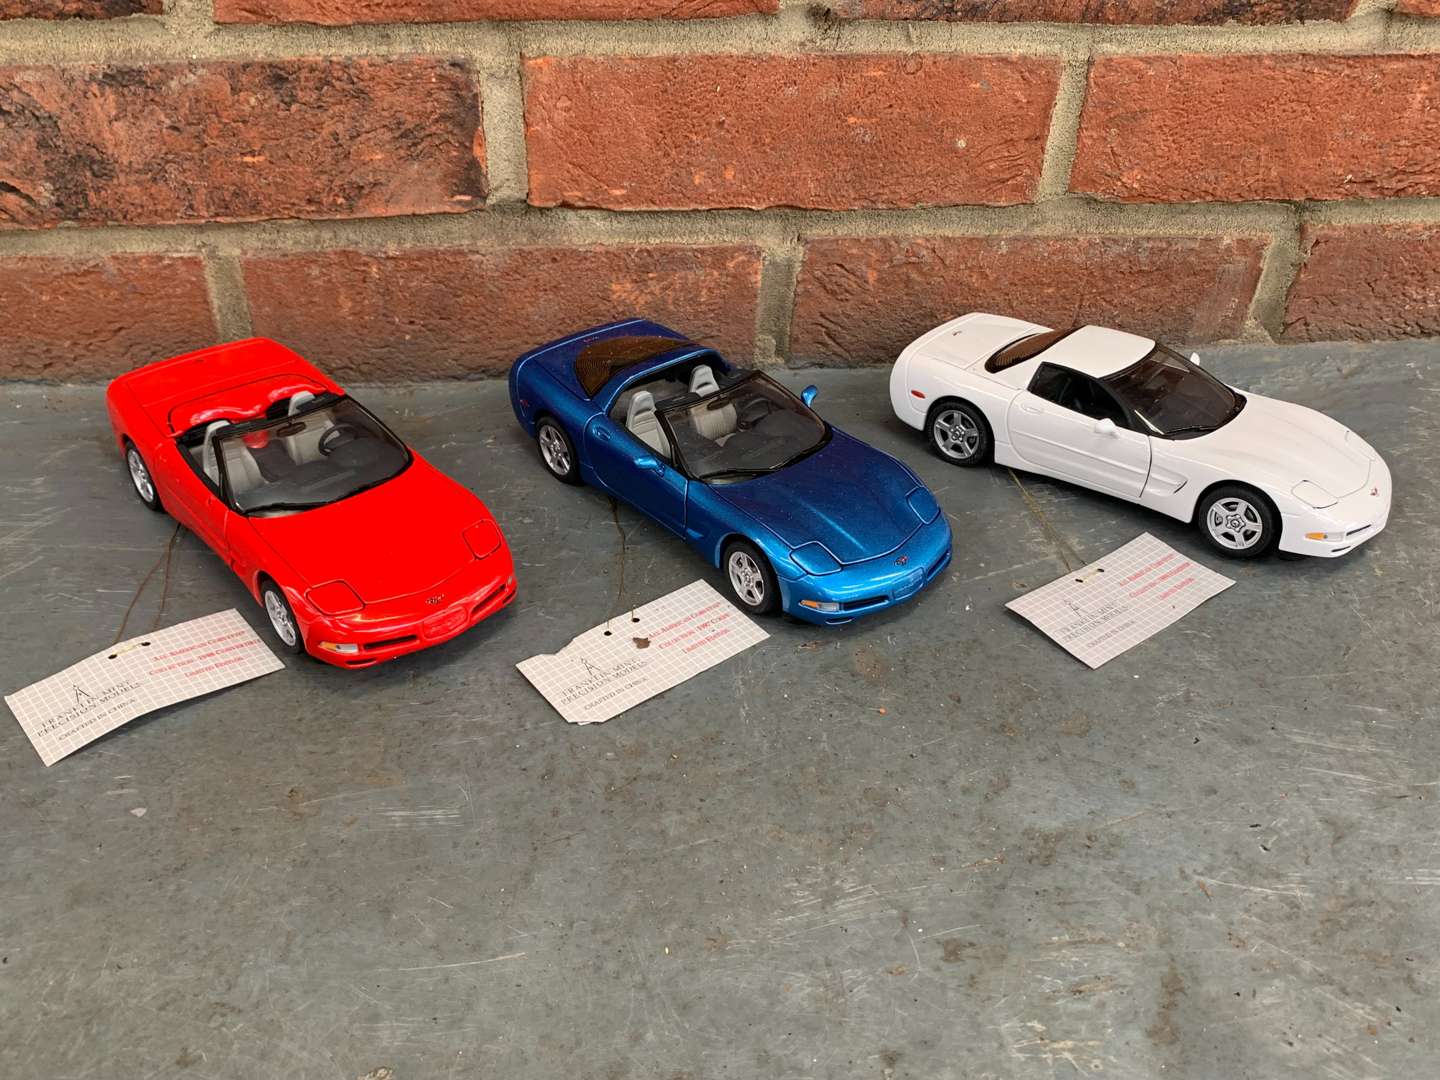 <p>Three Boxed Franklin Mint Corvette Model Cars</p>